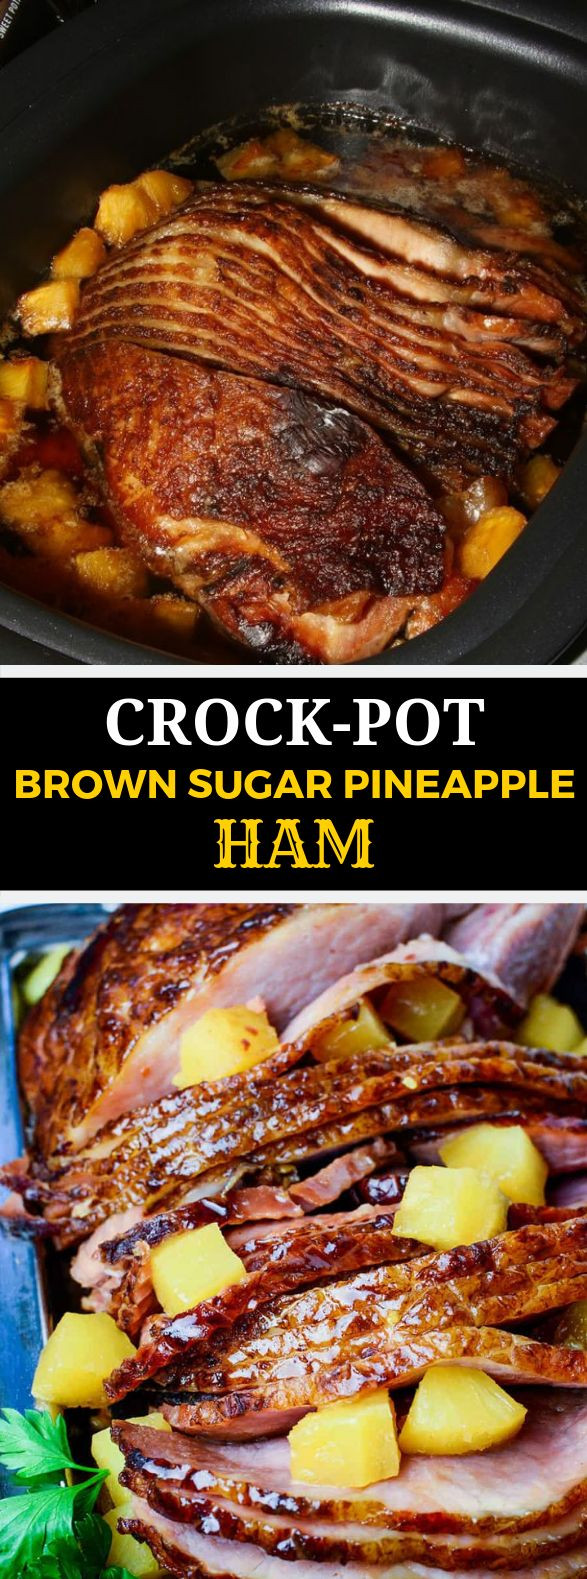 Crock Pot Easter Ham
 Crock Pot Brown Sugar Pineapple Ham for the Holidays